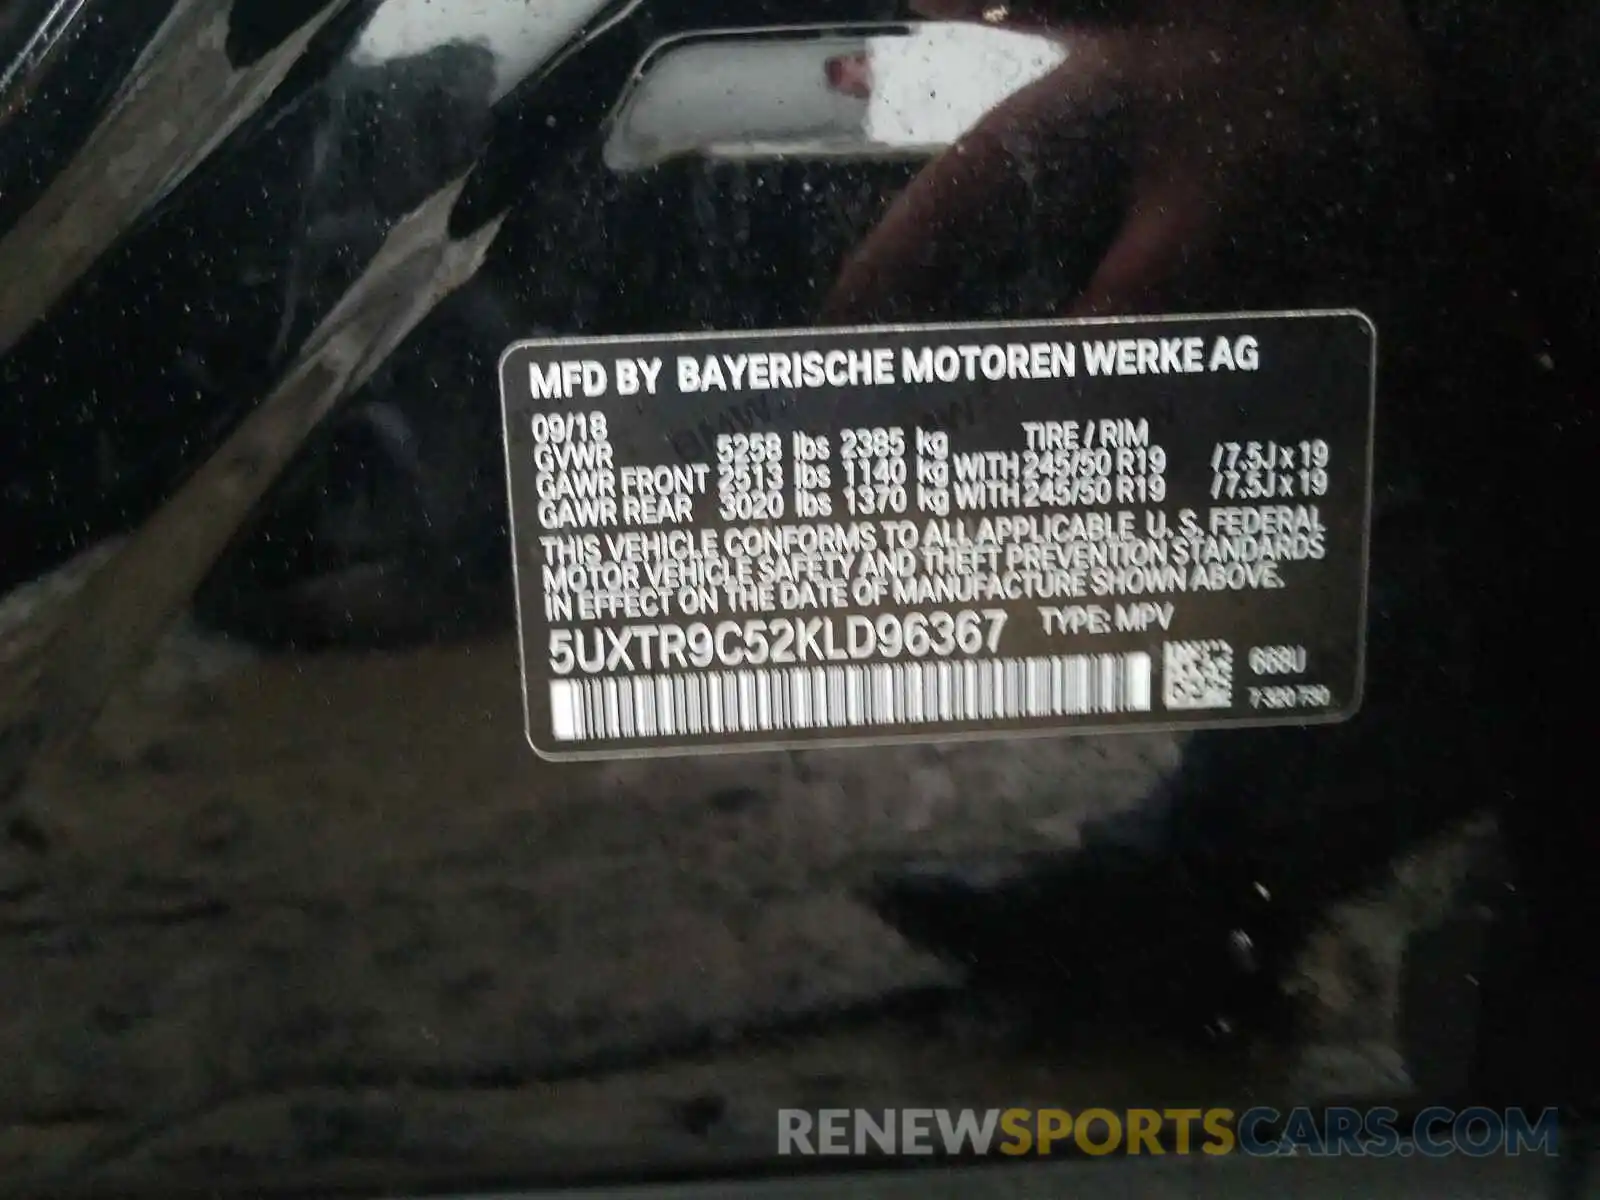 10 Photograph of a damaged car 5UXTR9C52KLD96367 BMW X3 2019